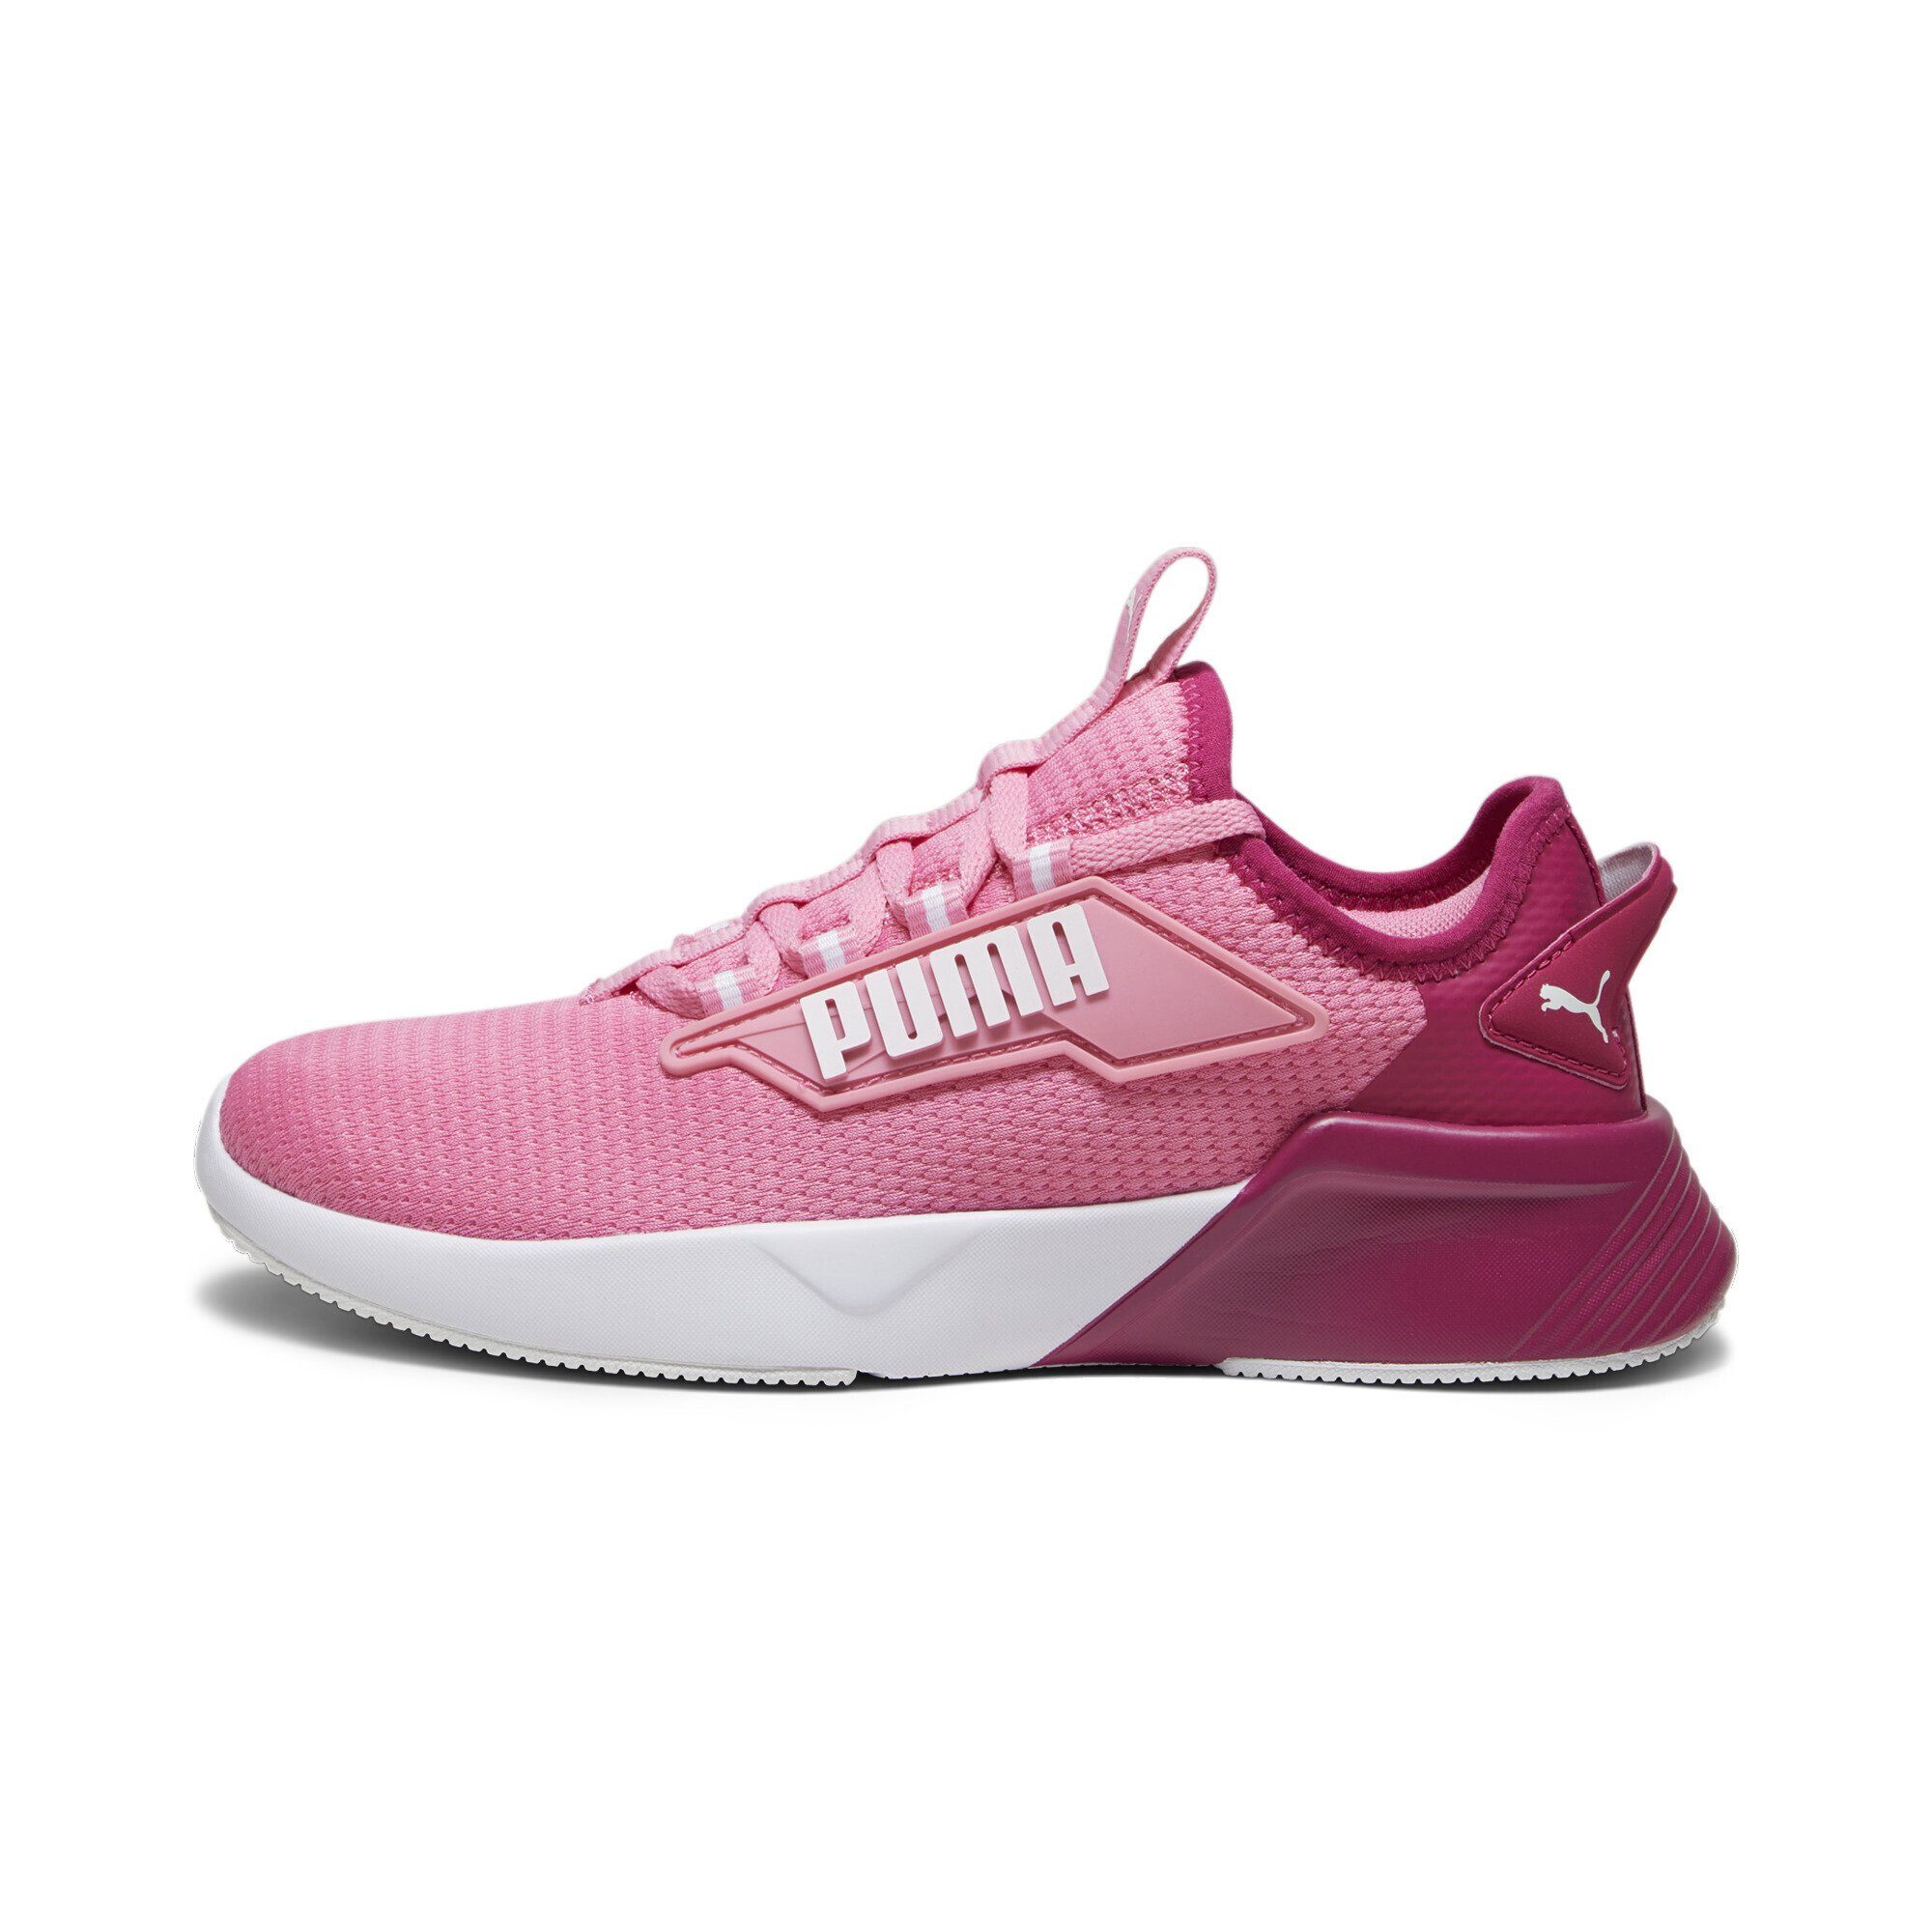 PUMA Retaliate 2 Sneakers Jugendliche Pinktastic White Burst Pink Laufschuh Strawberry